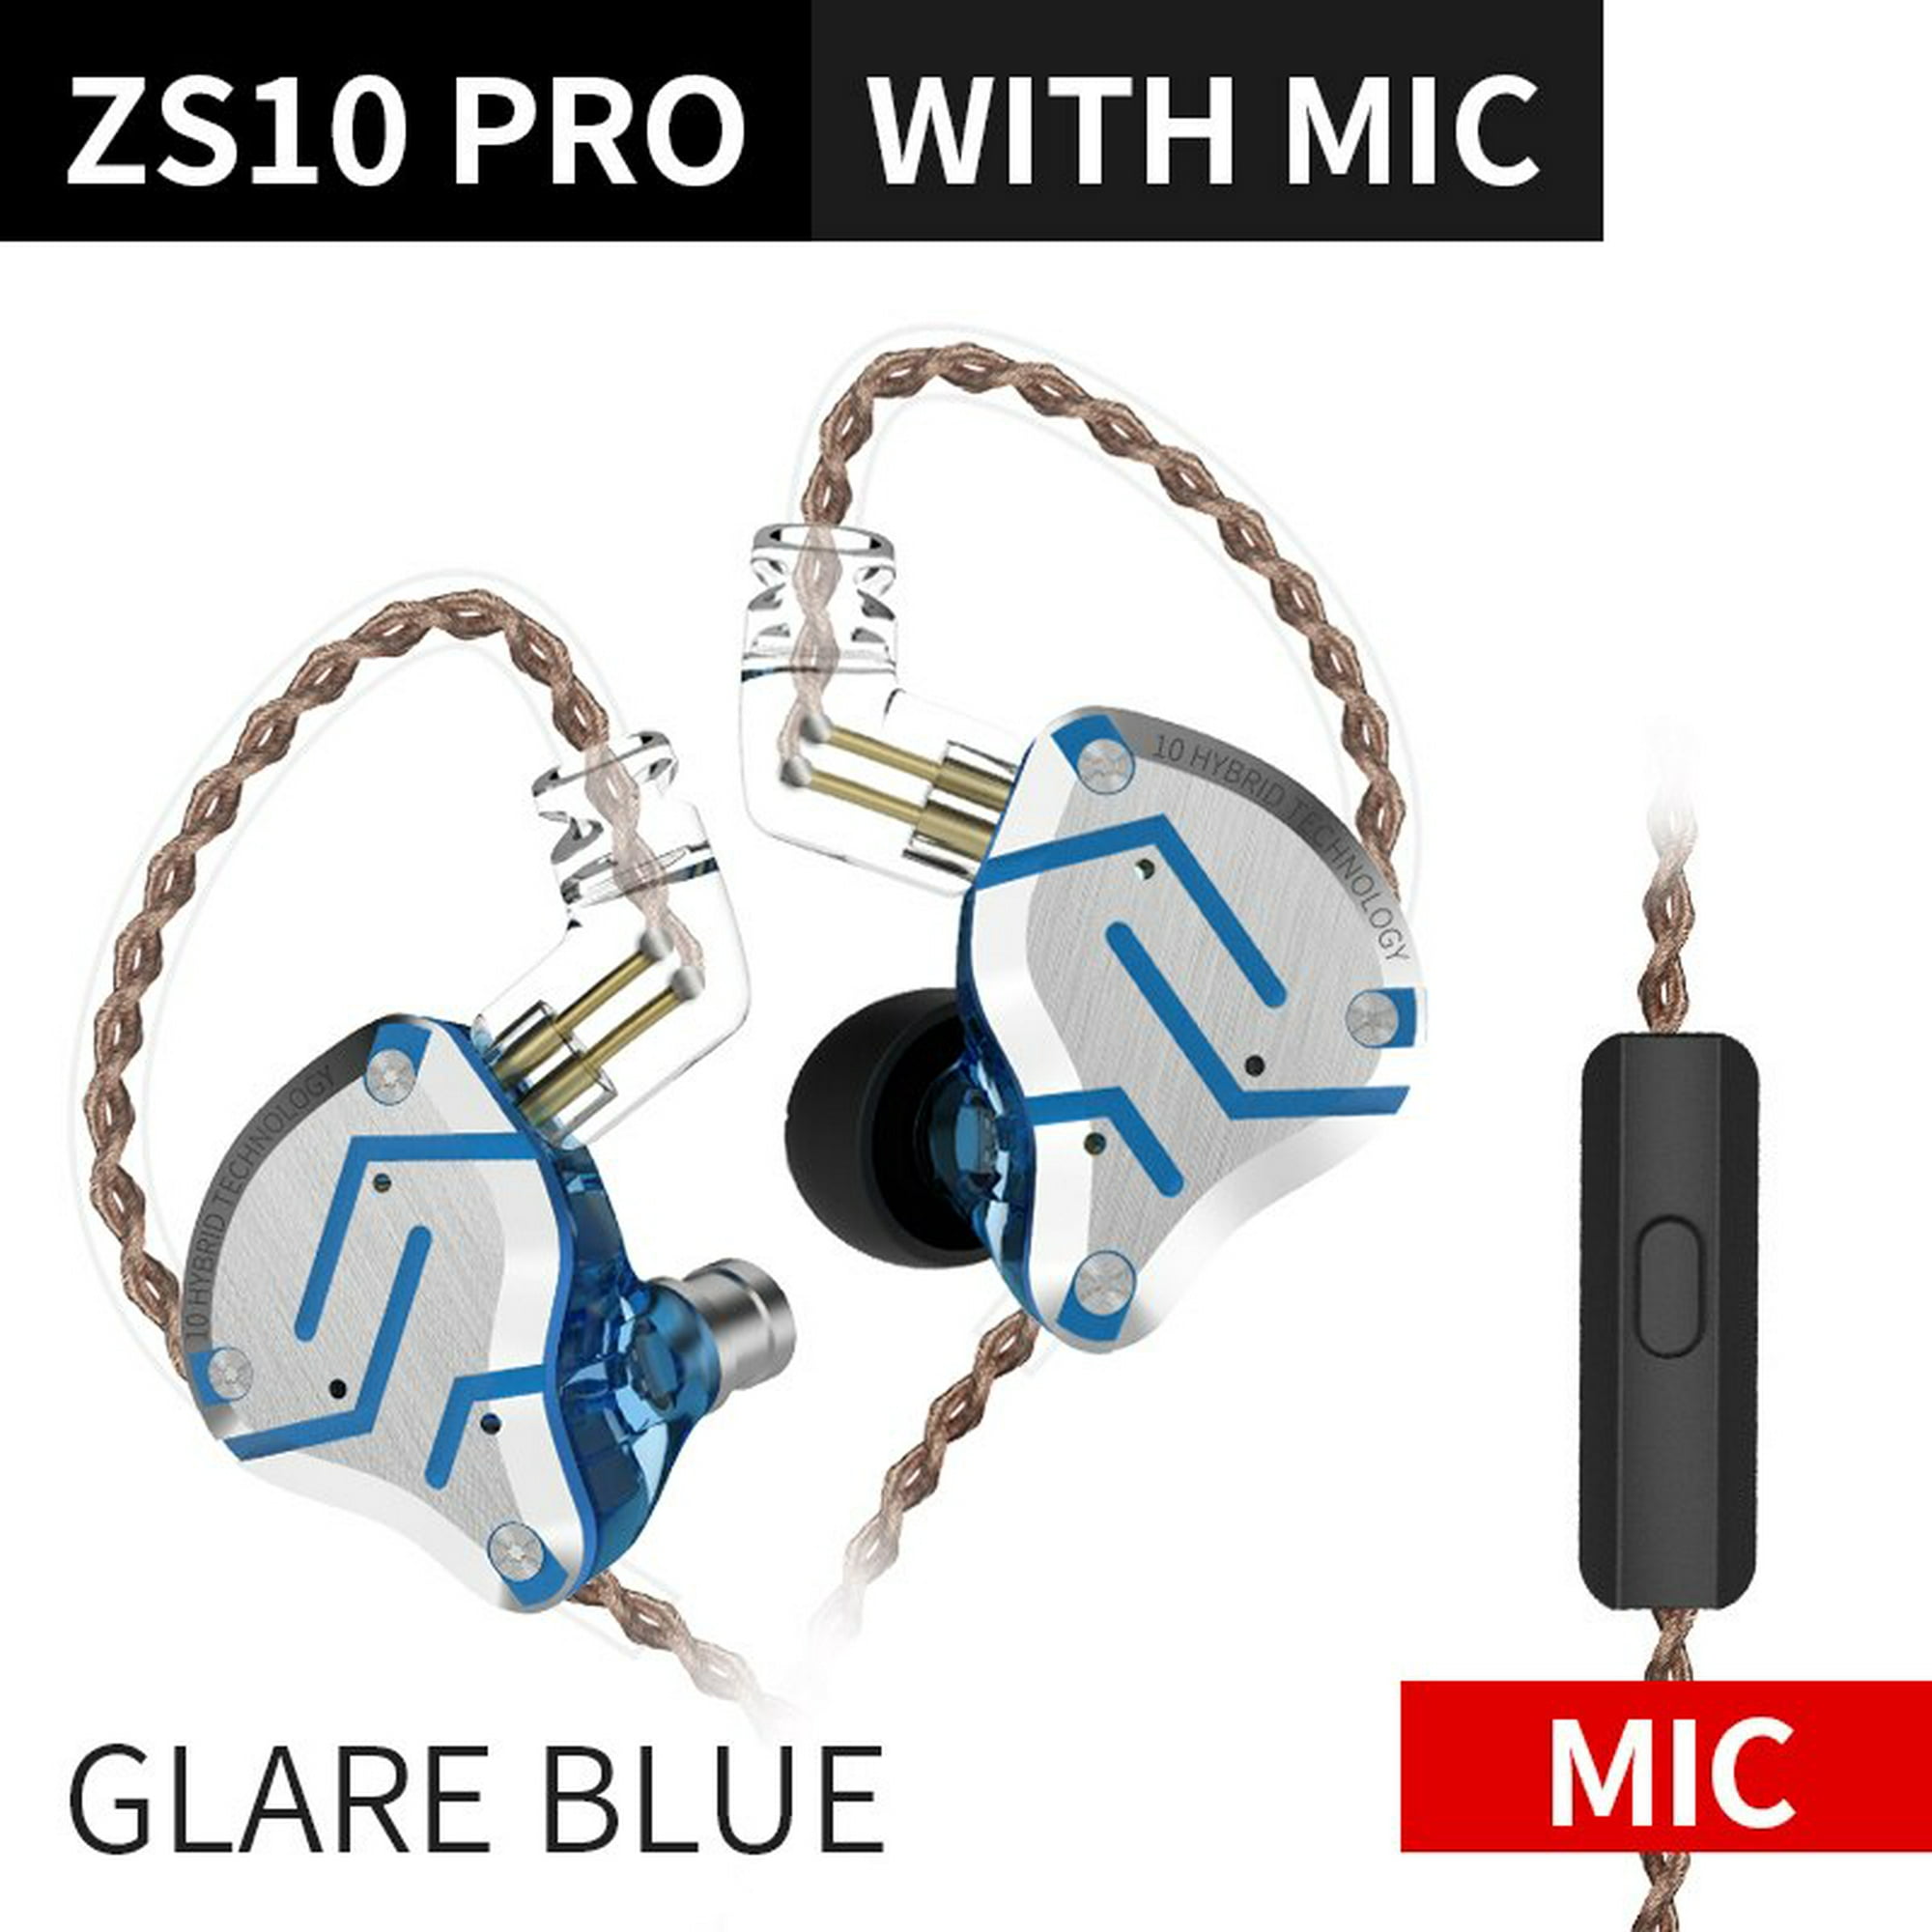 Audífonos kz zsn pro x originales in ear hibridos Negro Con Mic KZ